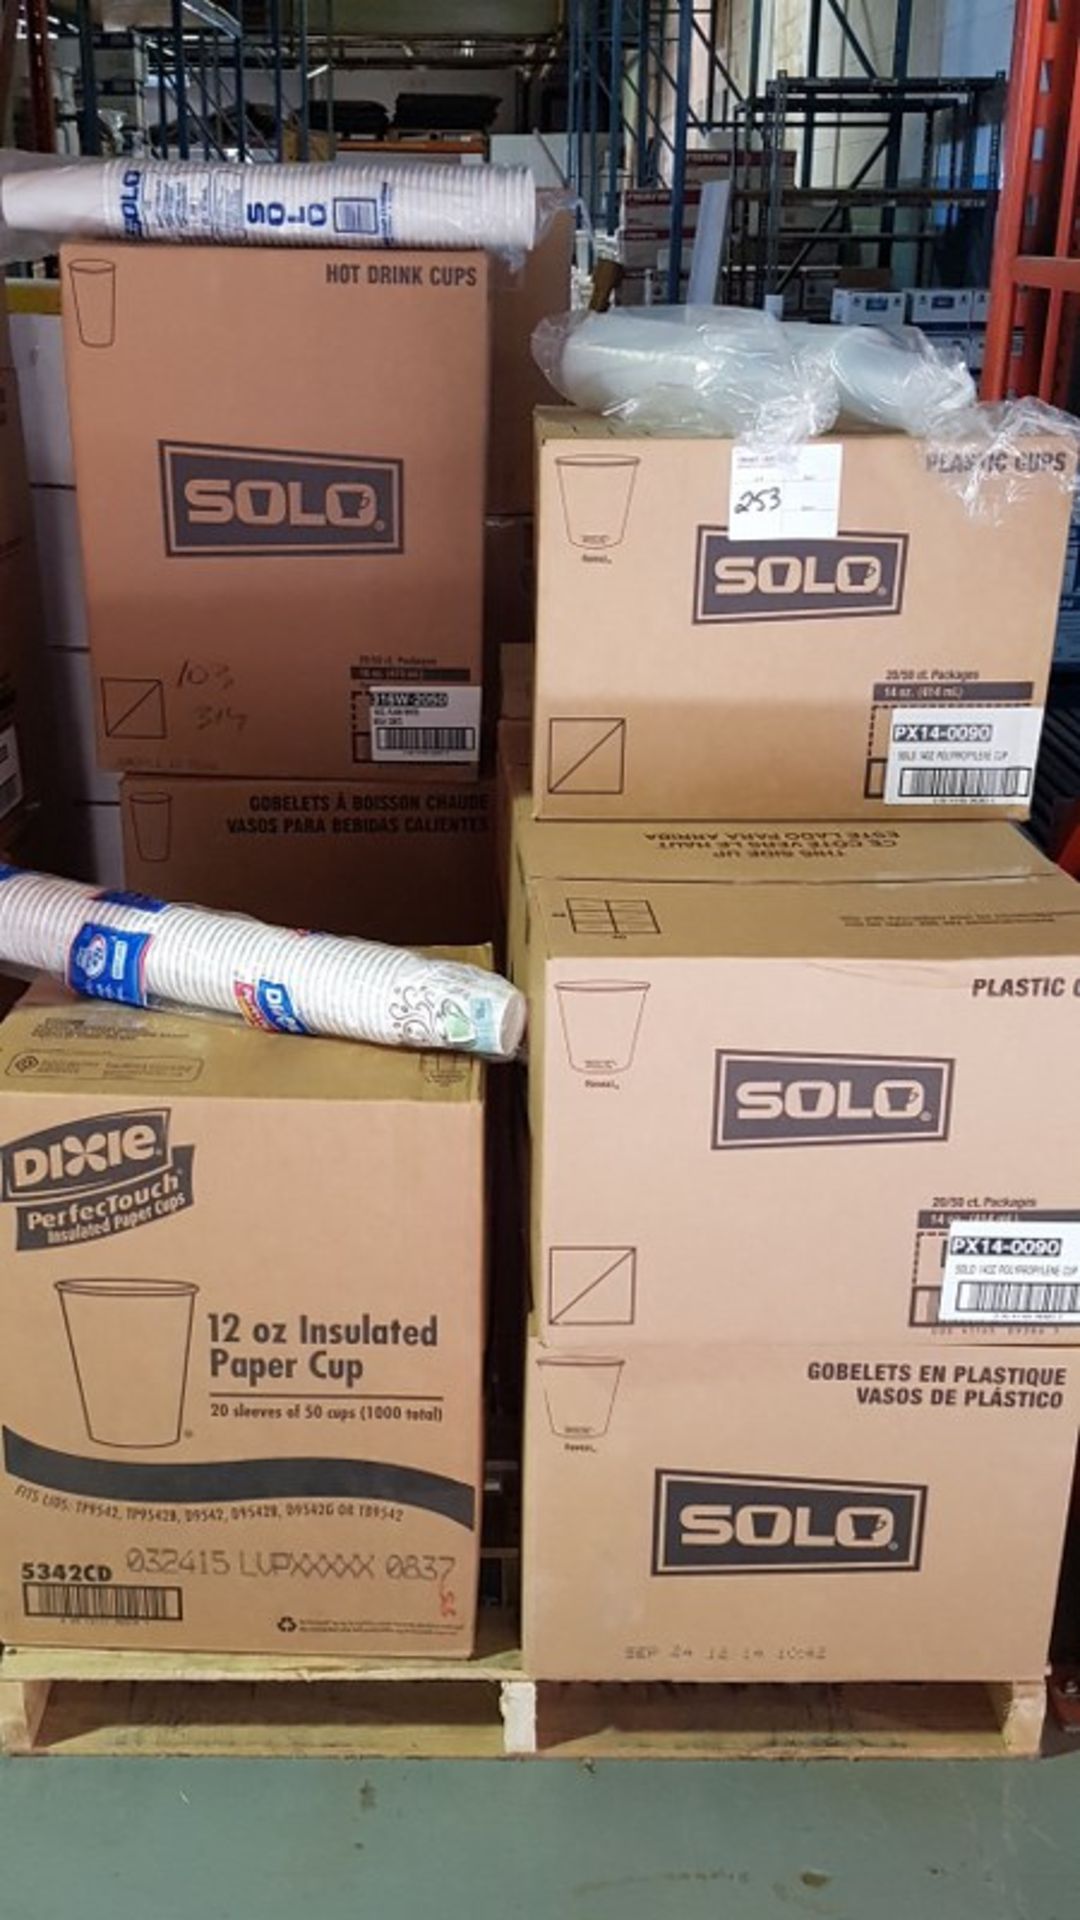 SOLO PLASTIC CUPS 14OZ - 7 BOXES x 20/BOX x 50PCS, DIXIE INSULATED PAPER CUPS 12OZ - 1 BOX x 20/